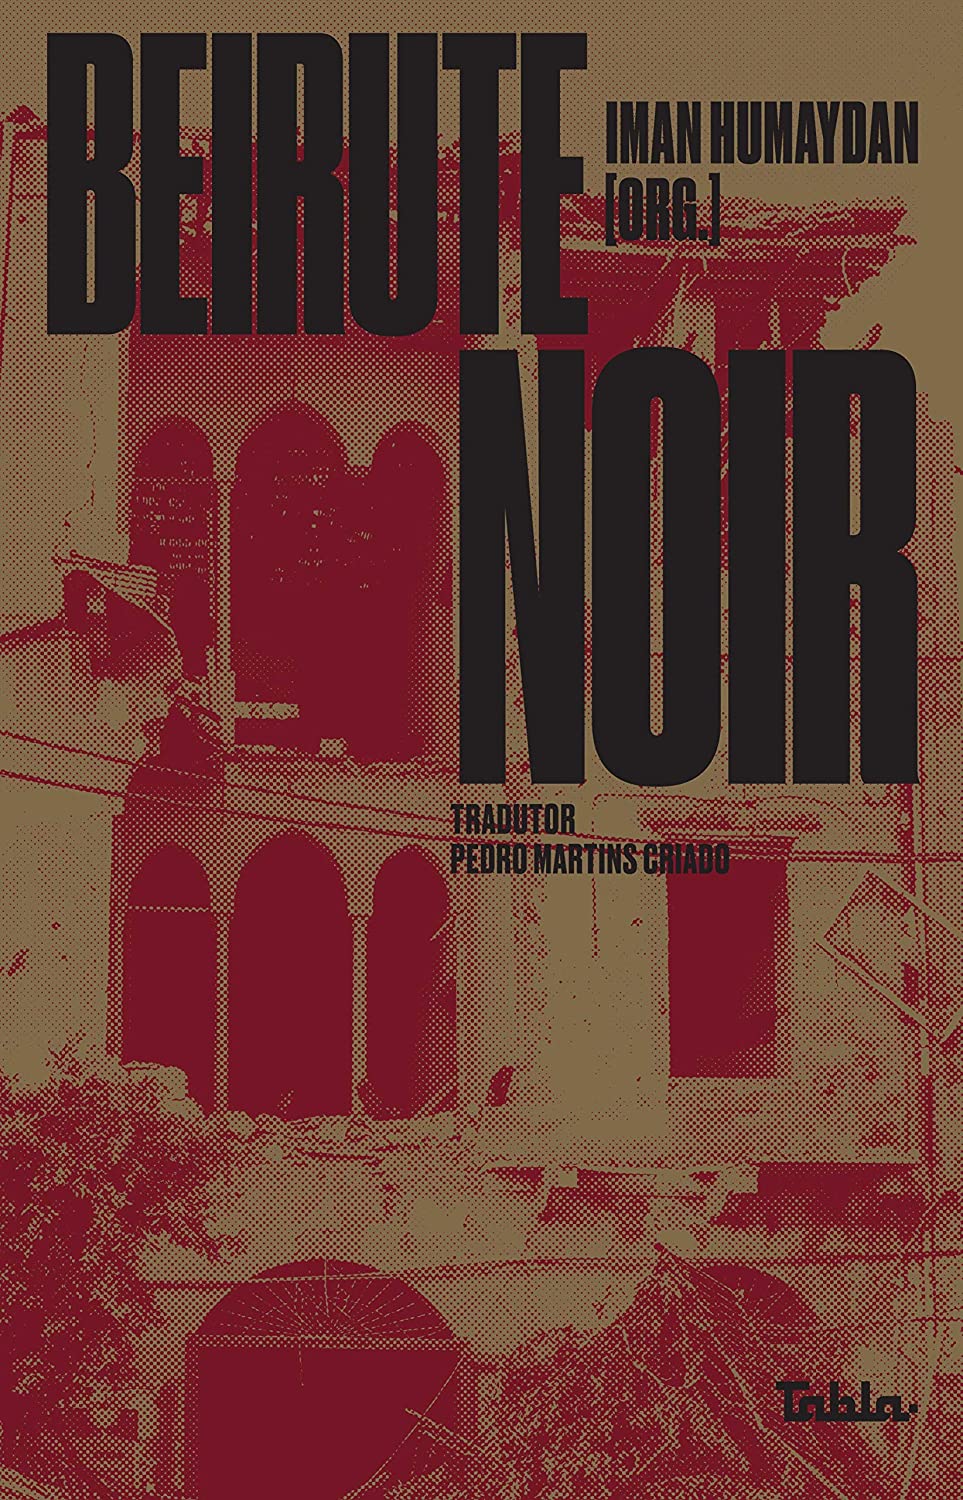 Pedro Martins Criado, Iman Humaydan: Beirute Noir (Paperback, Português language, 2021, Tabla)